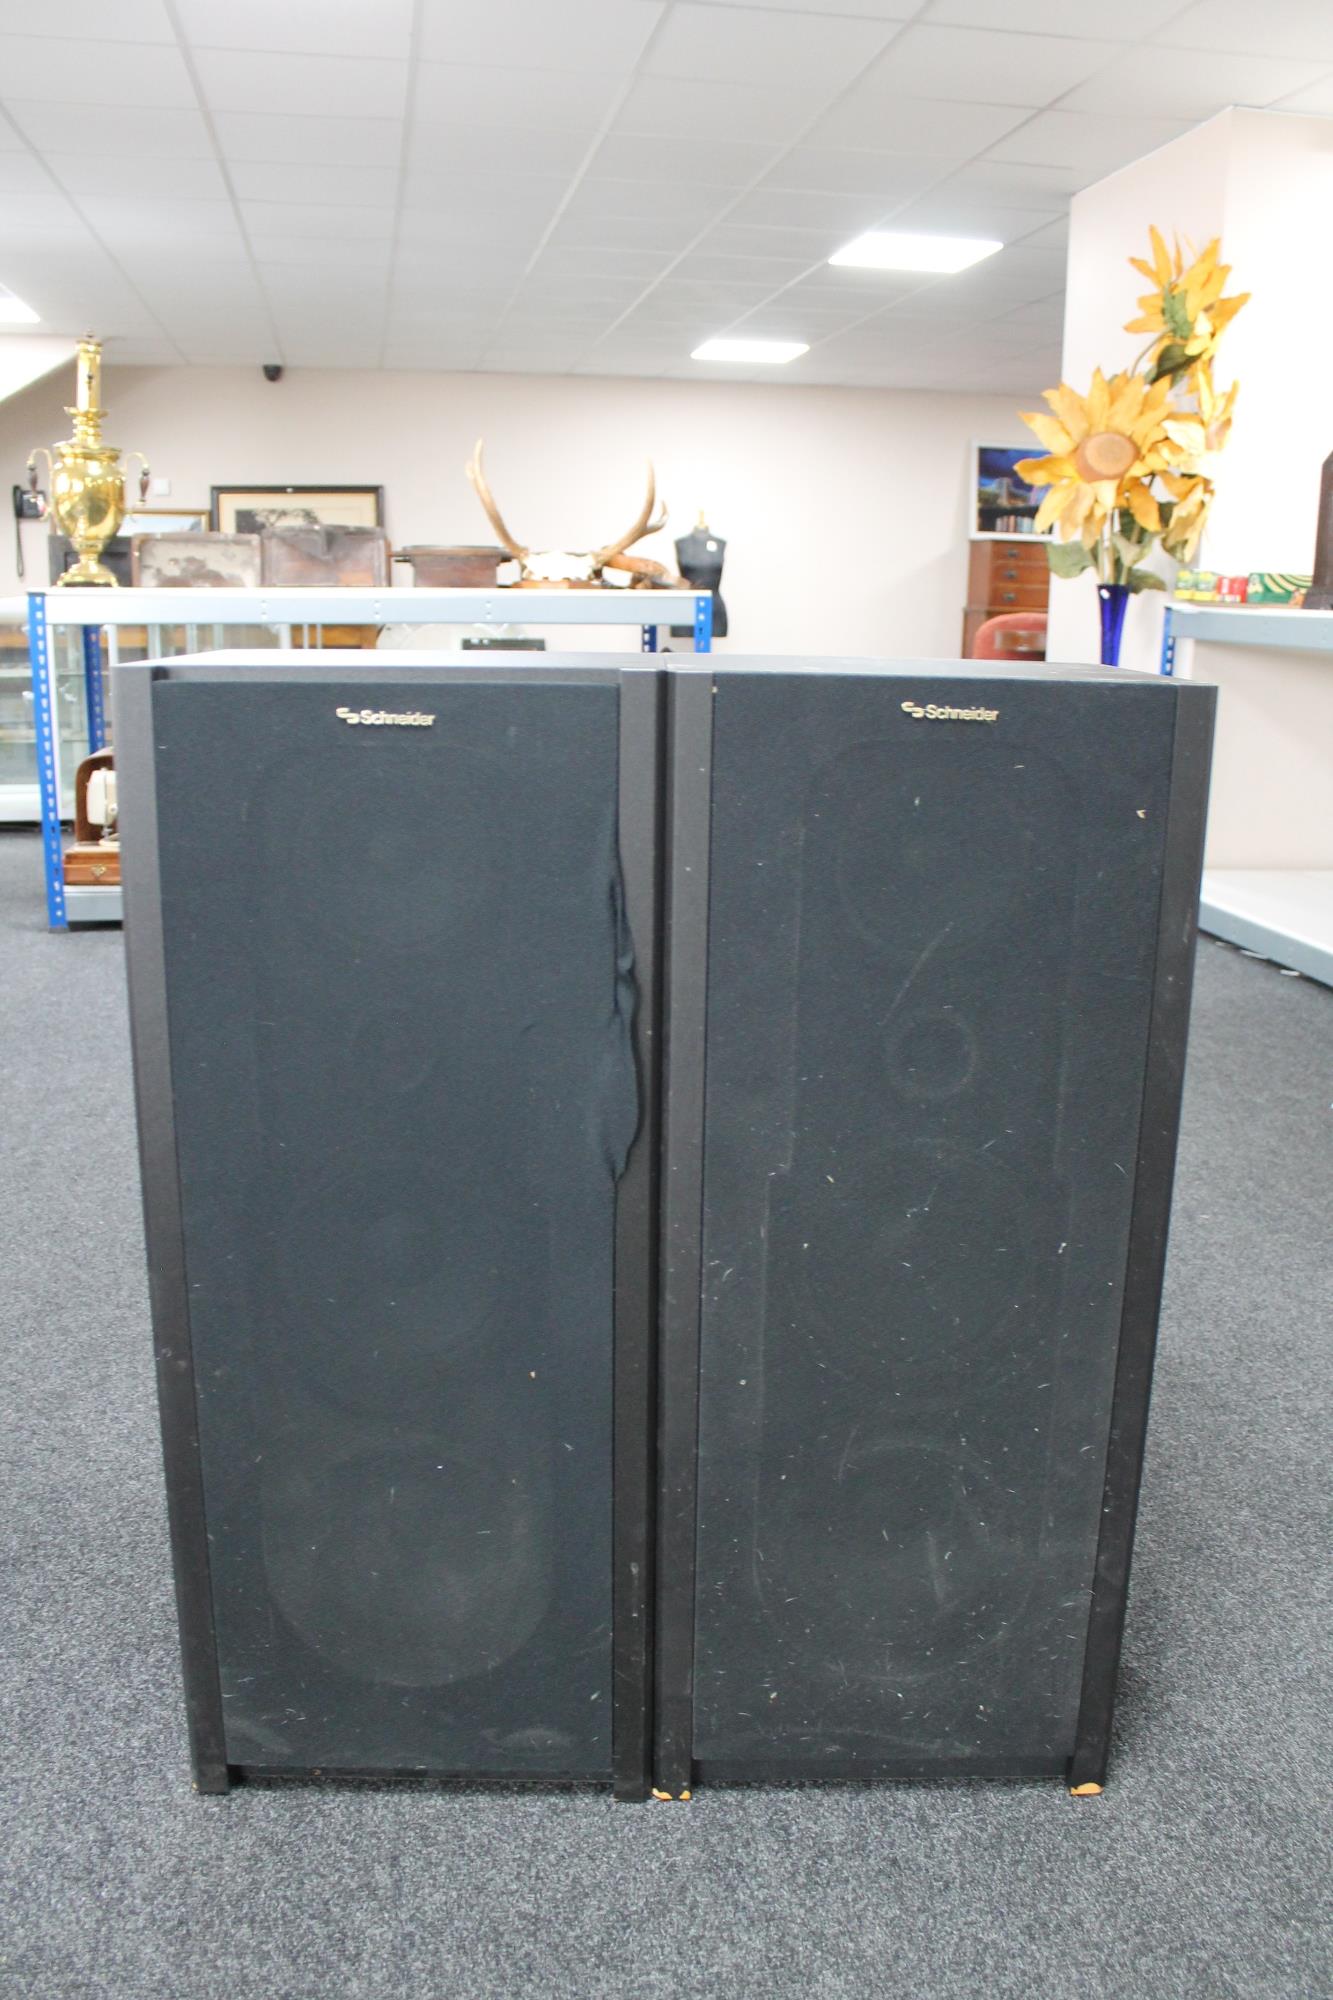 A pair of Schneider floor standing speakers